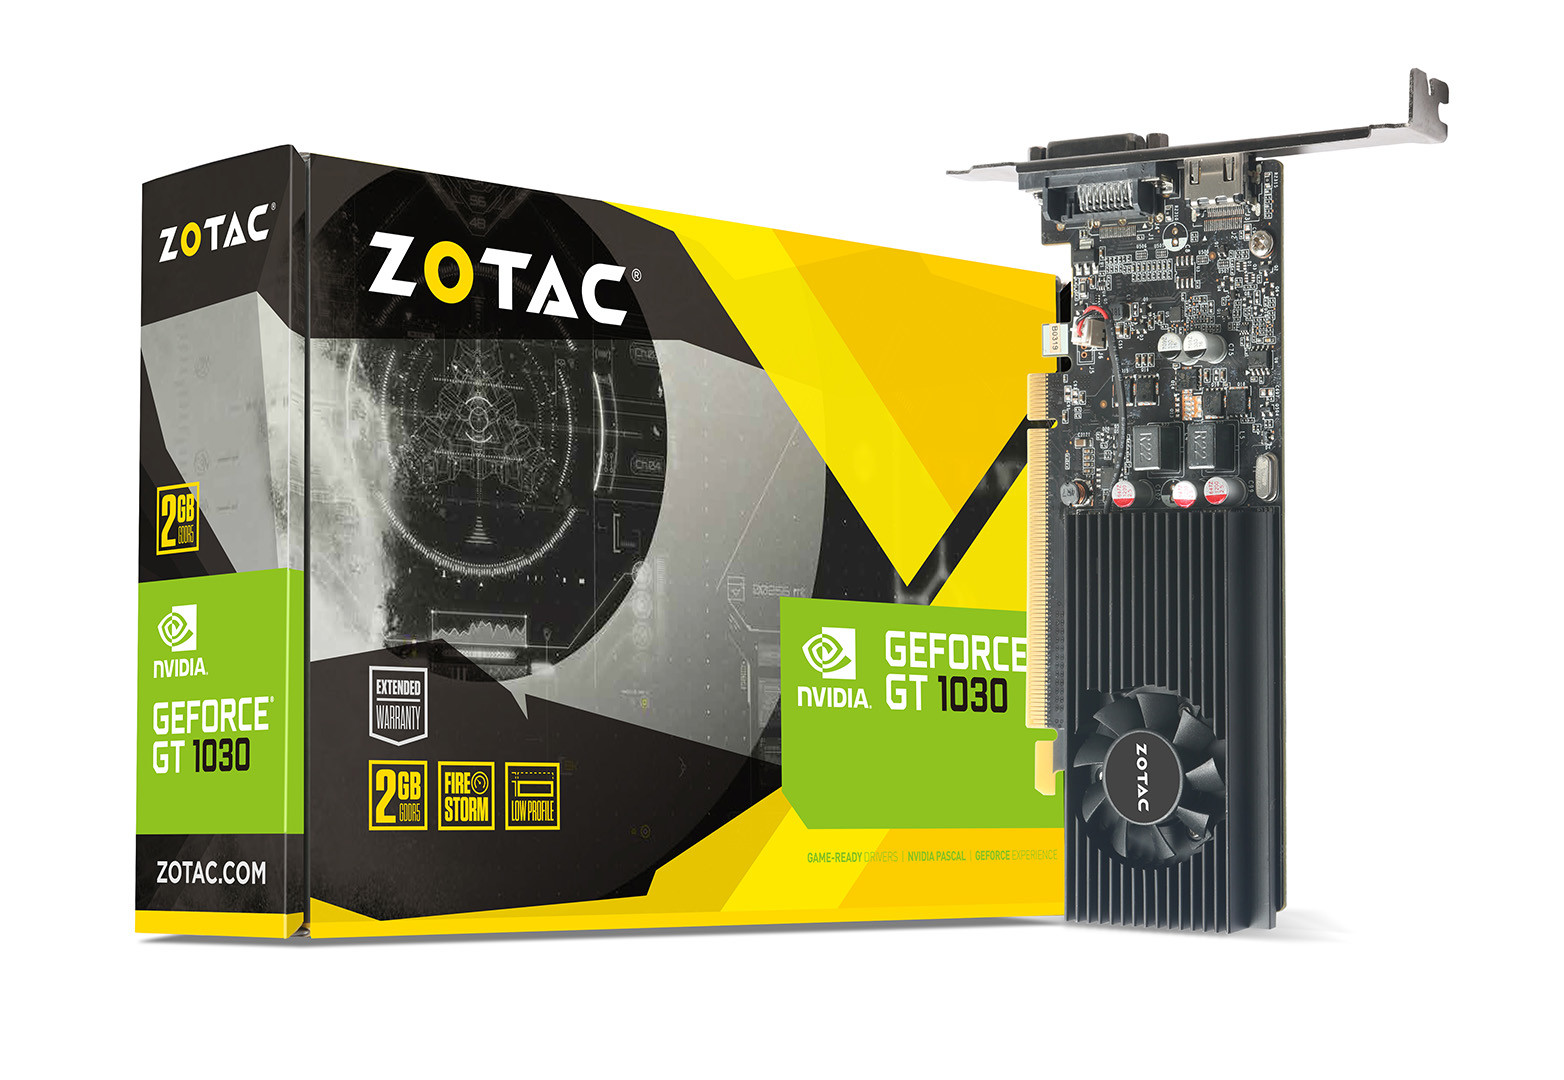 Immagine pubblicata in relazione al seguente contenuto: Zotac introduce la video card low-power e low-profile GeForce GT 1030 | Nome immagine: news26348_Zotac-GeForce-GT-1030_1.jpg